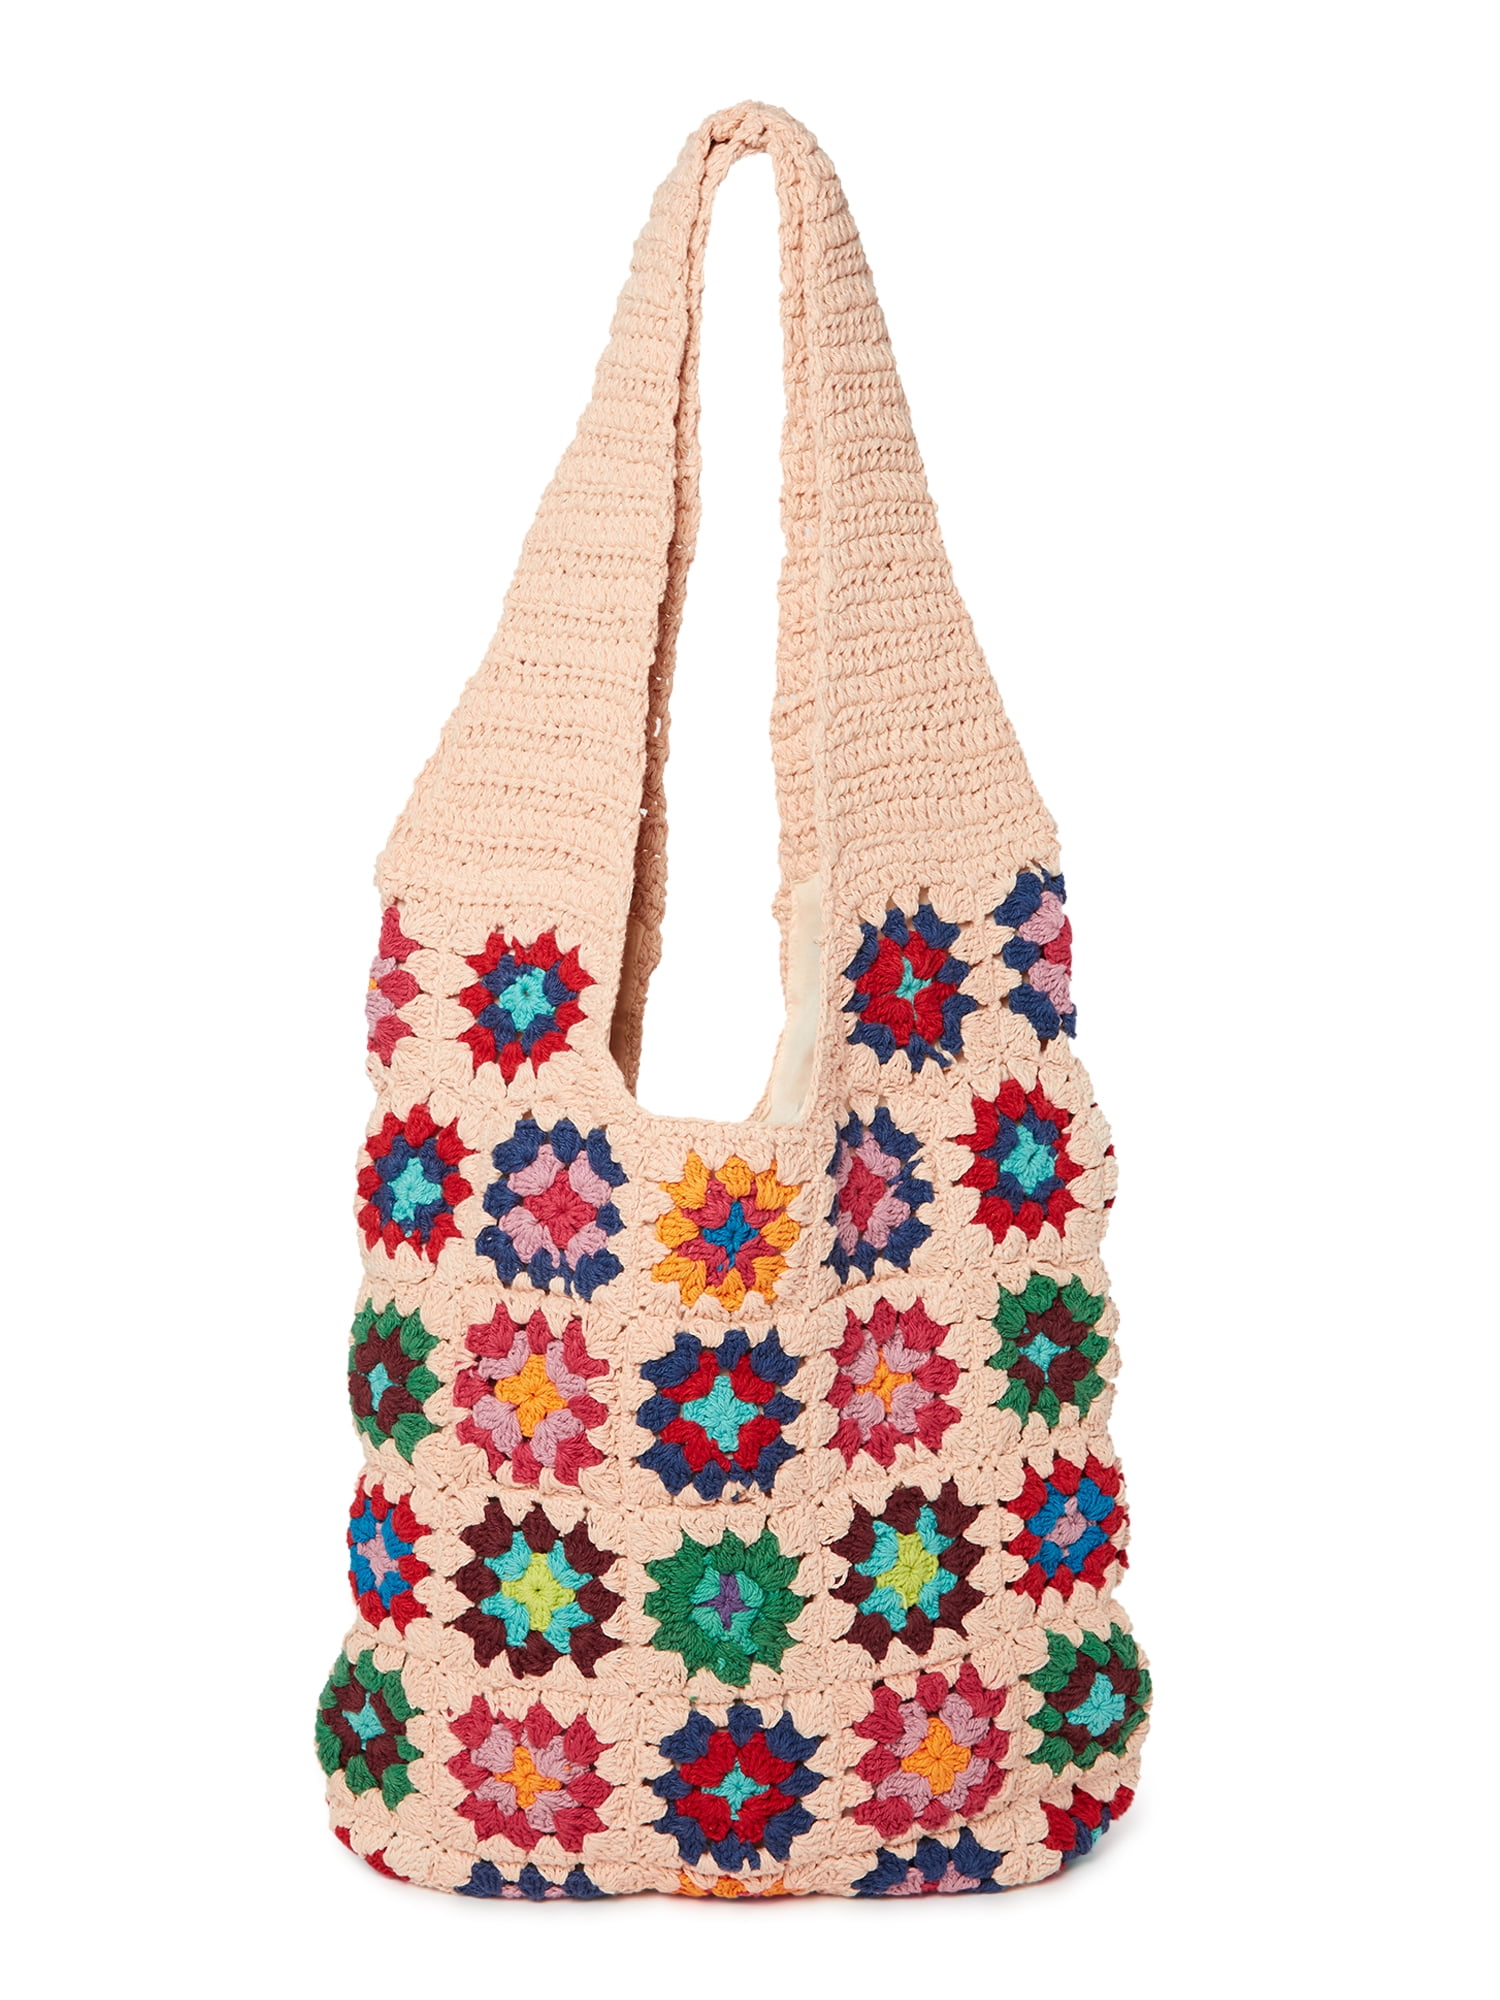 Bag/Handmade Bag/Handmade Woman Bag/Crochet Bag/Knitted Bag/Green Bag/White Bag/Black Bag/Beige Bag/Shoulder’s Bag/Handcraft